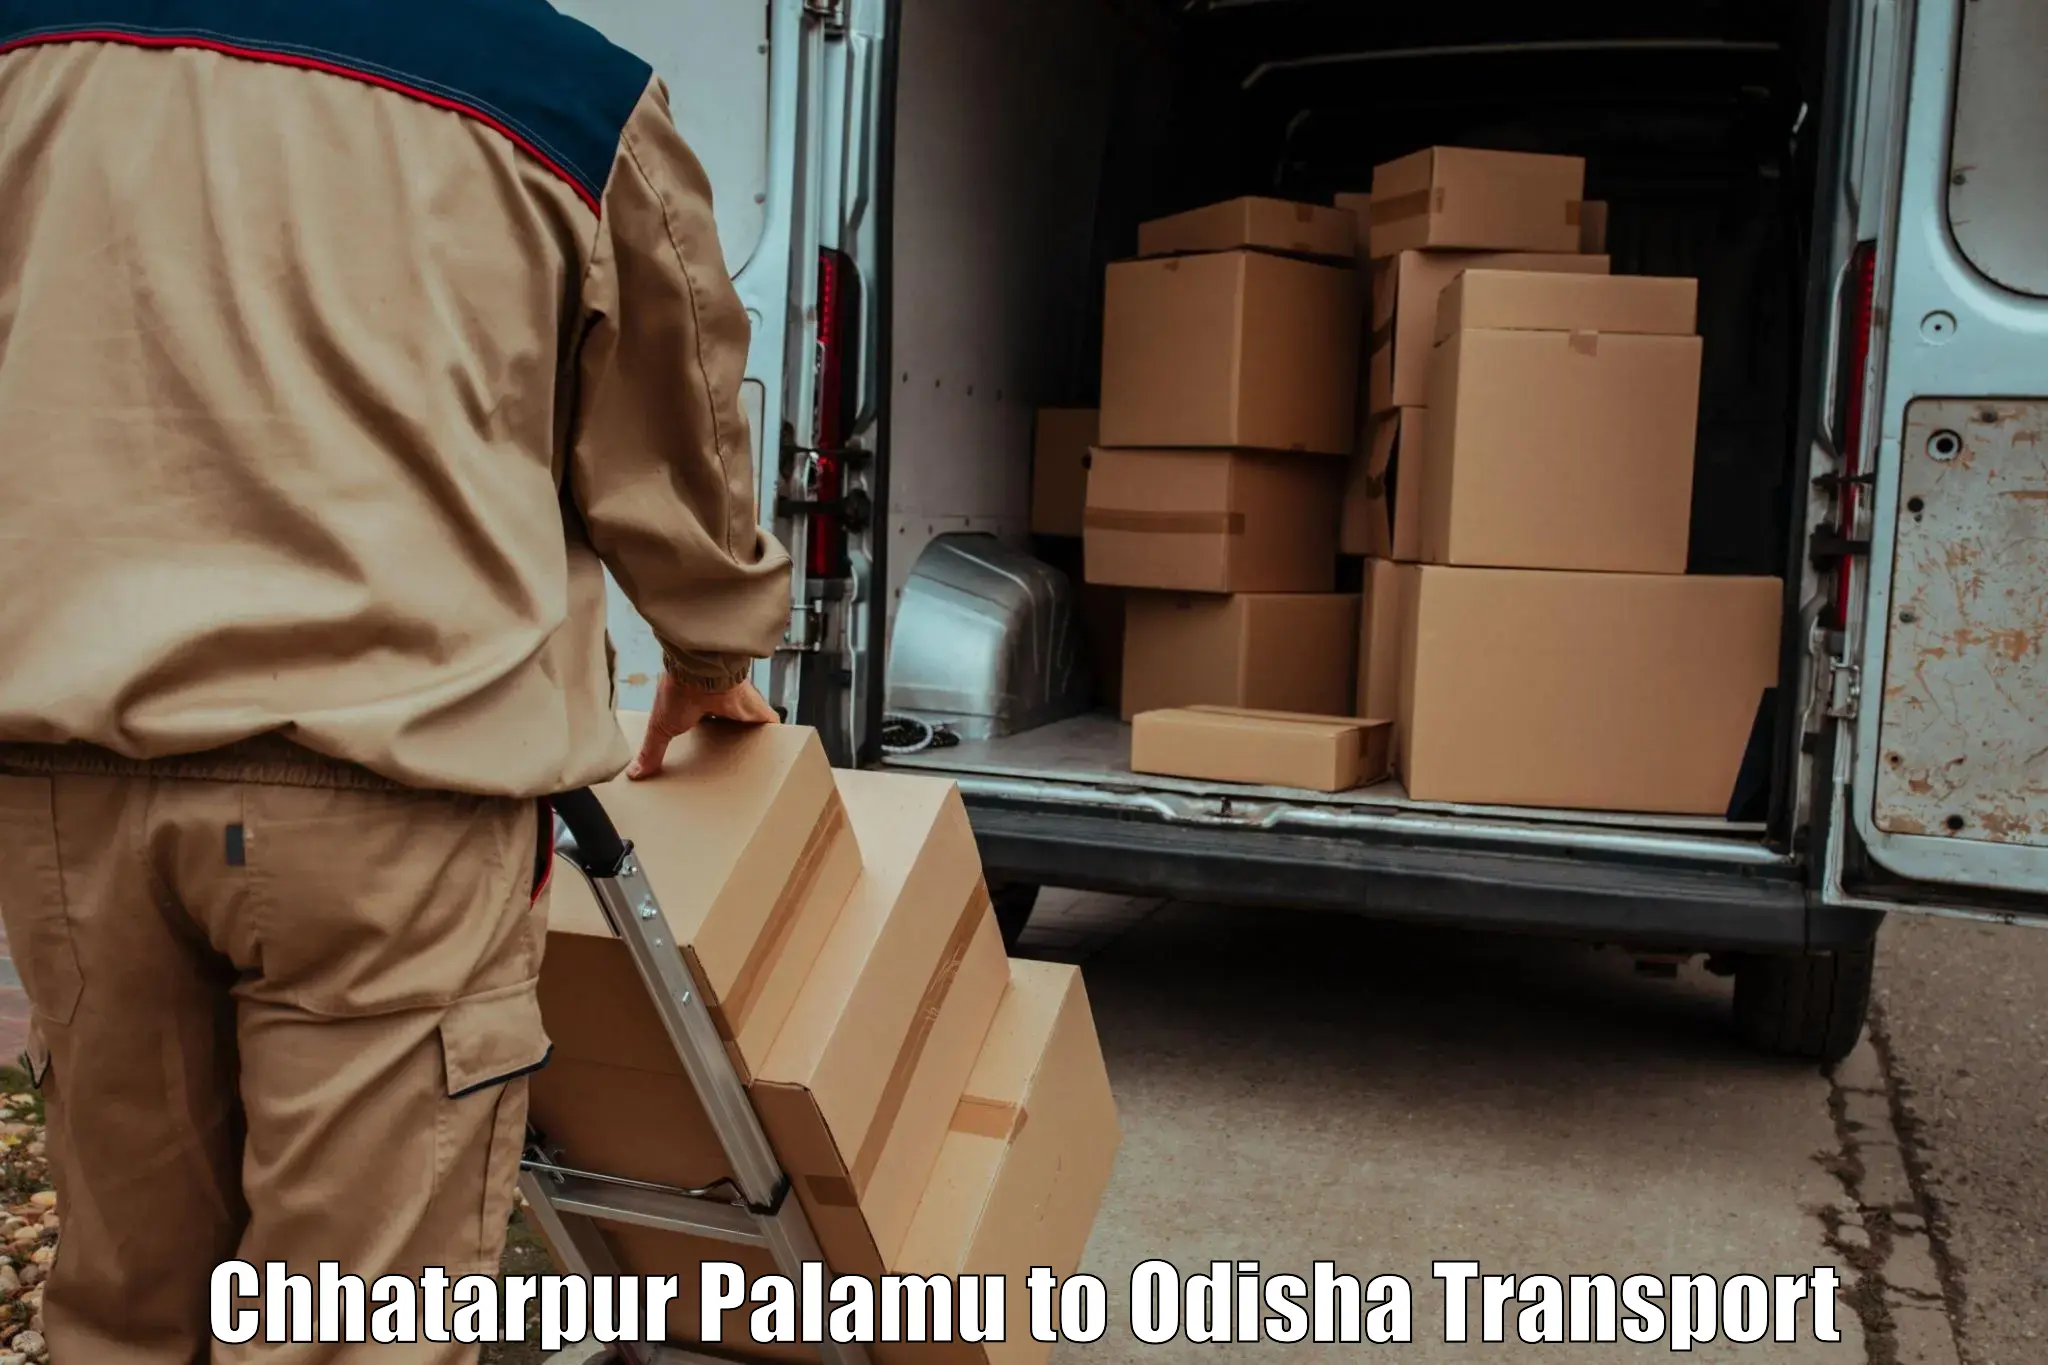 Daily parcel service transport Chhatarpur Palamu to Angul